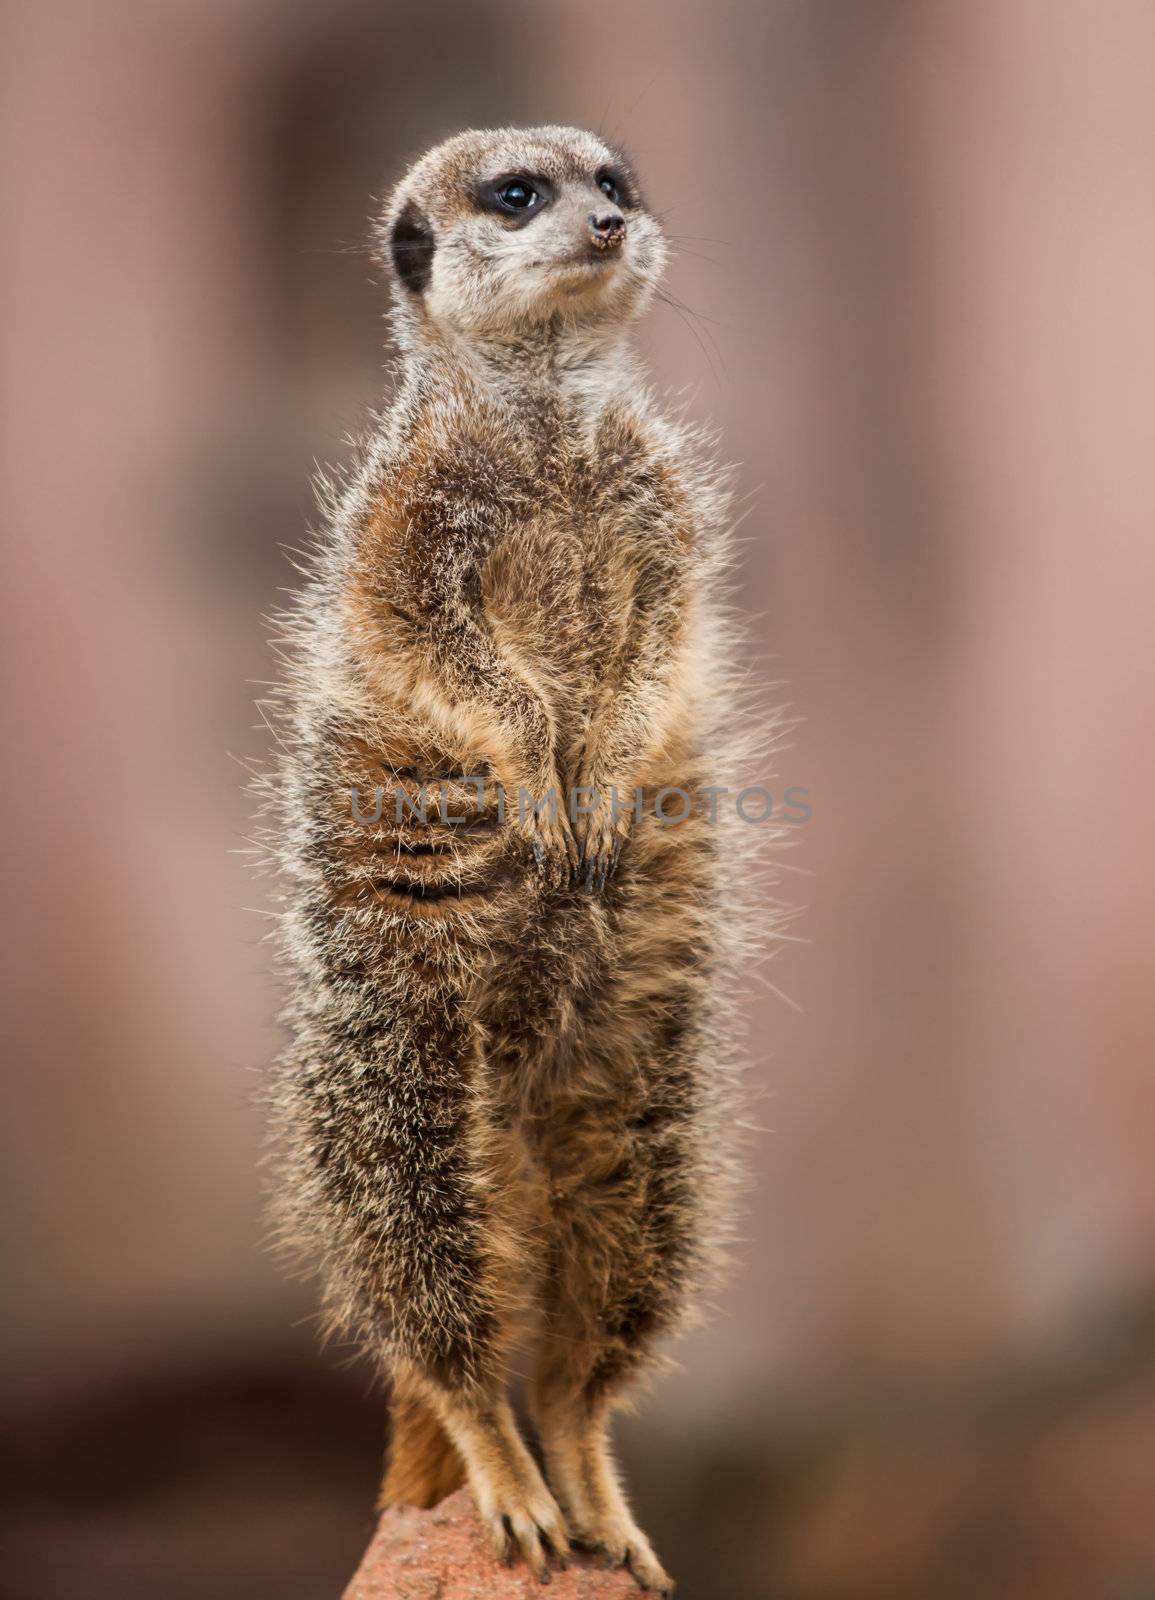 Animals of Africa: watchful meerkat by Arsgera